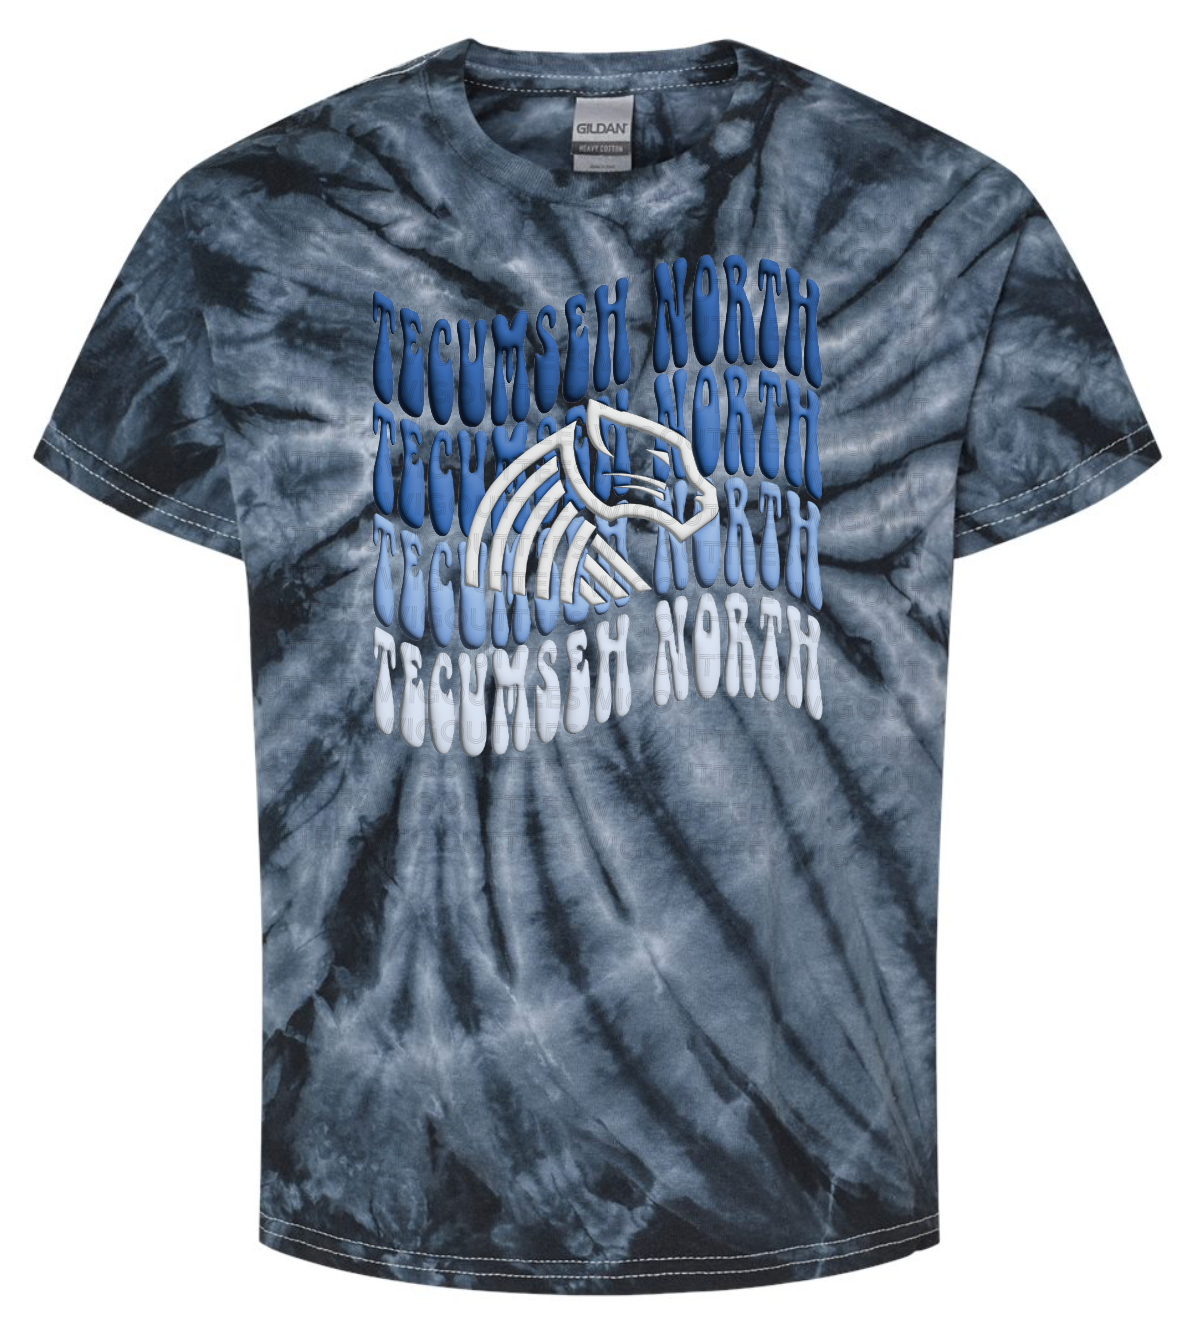 Retro Wave Panther Tie Dye T-shirt